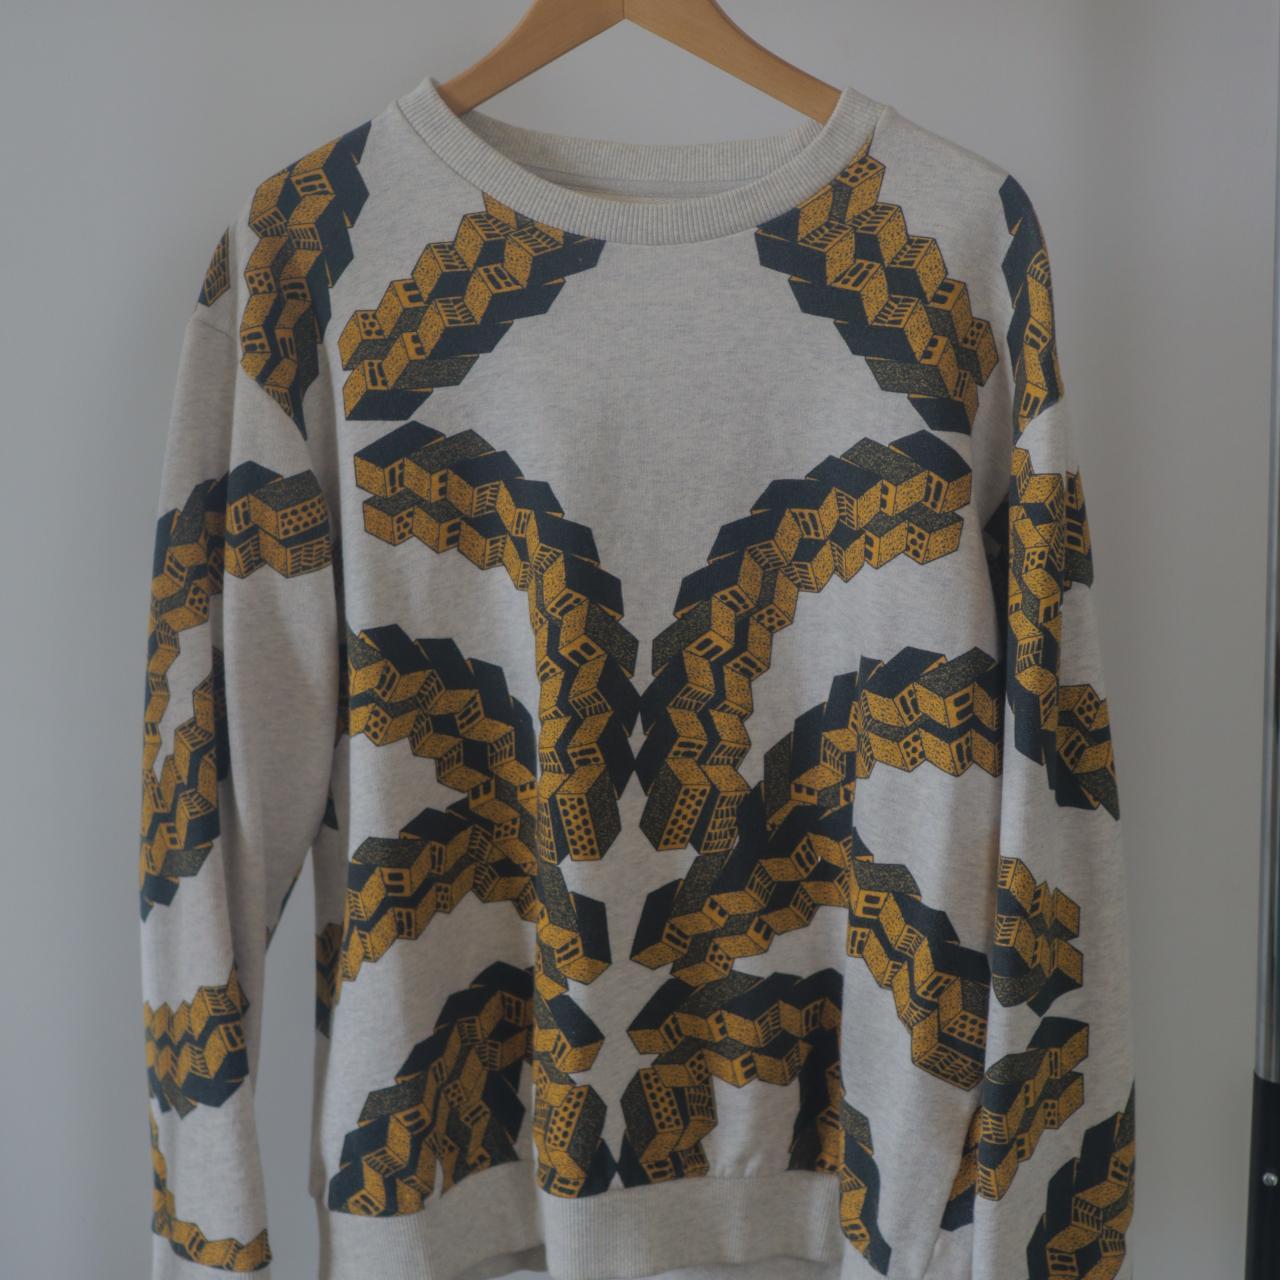 Product Image 1 - Henrik Vibskov printed Sweater. The